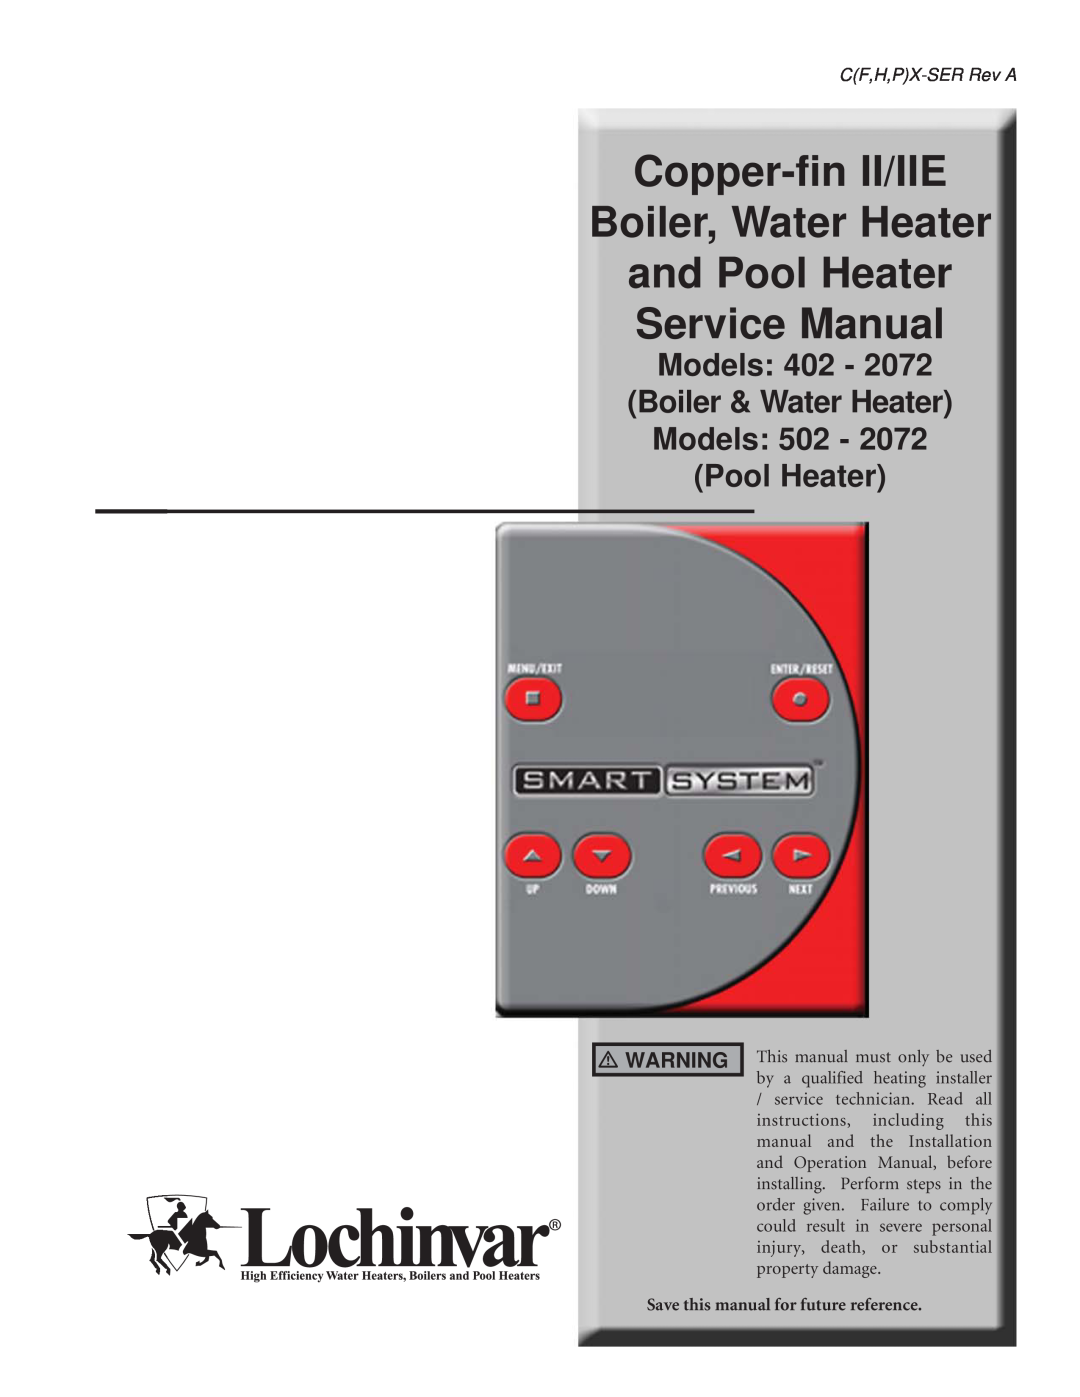 Lochinvar 402 - 2072 service manual Copper-finII/IIE Boiler and Water Heater, CFX-CHX-SERRev B 